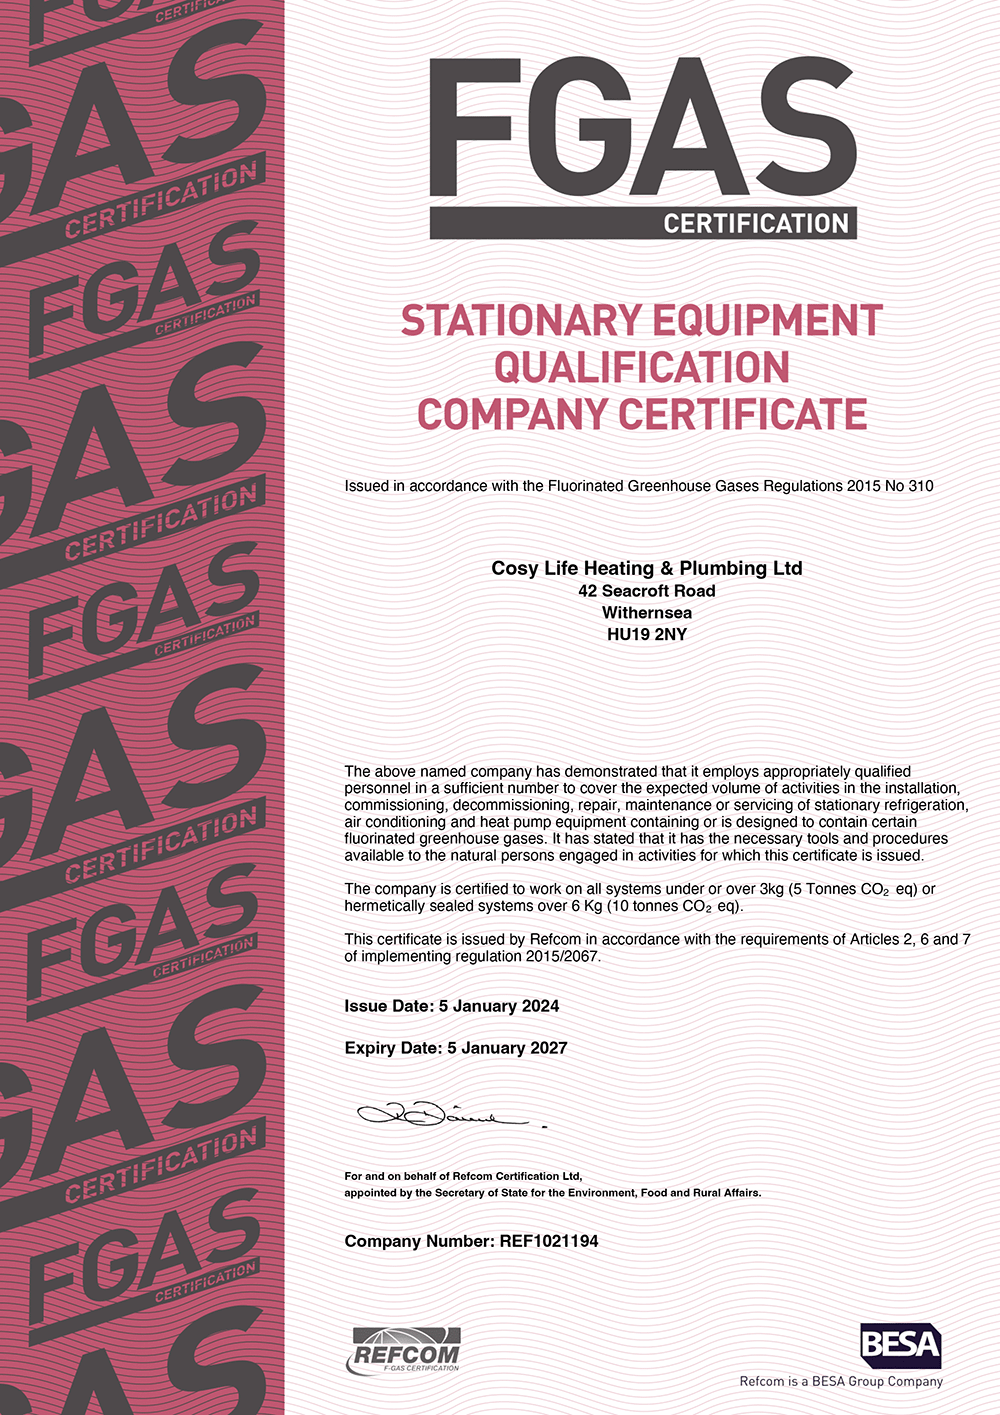 F-Gas certification